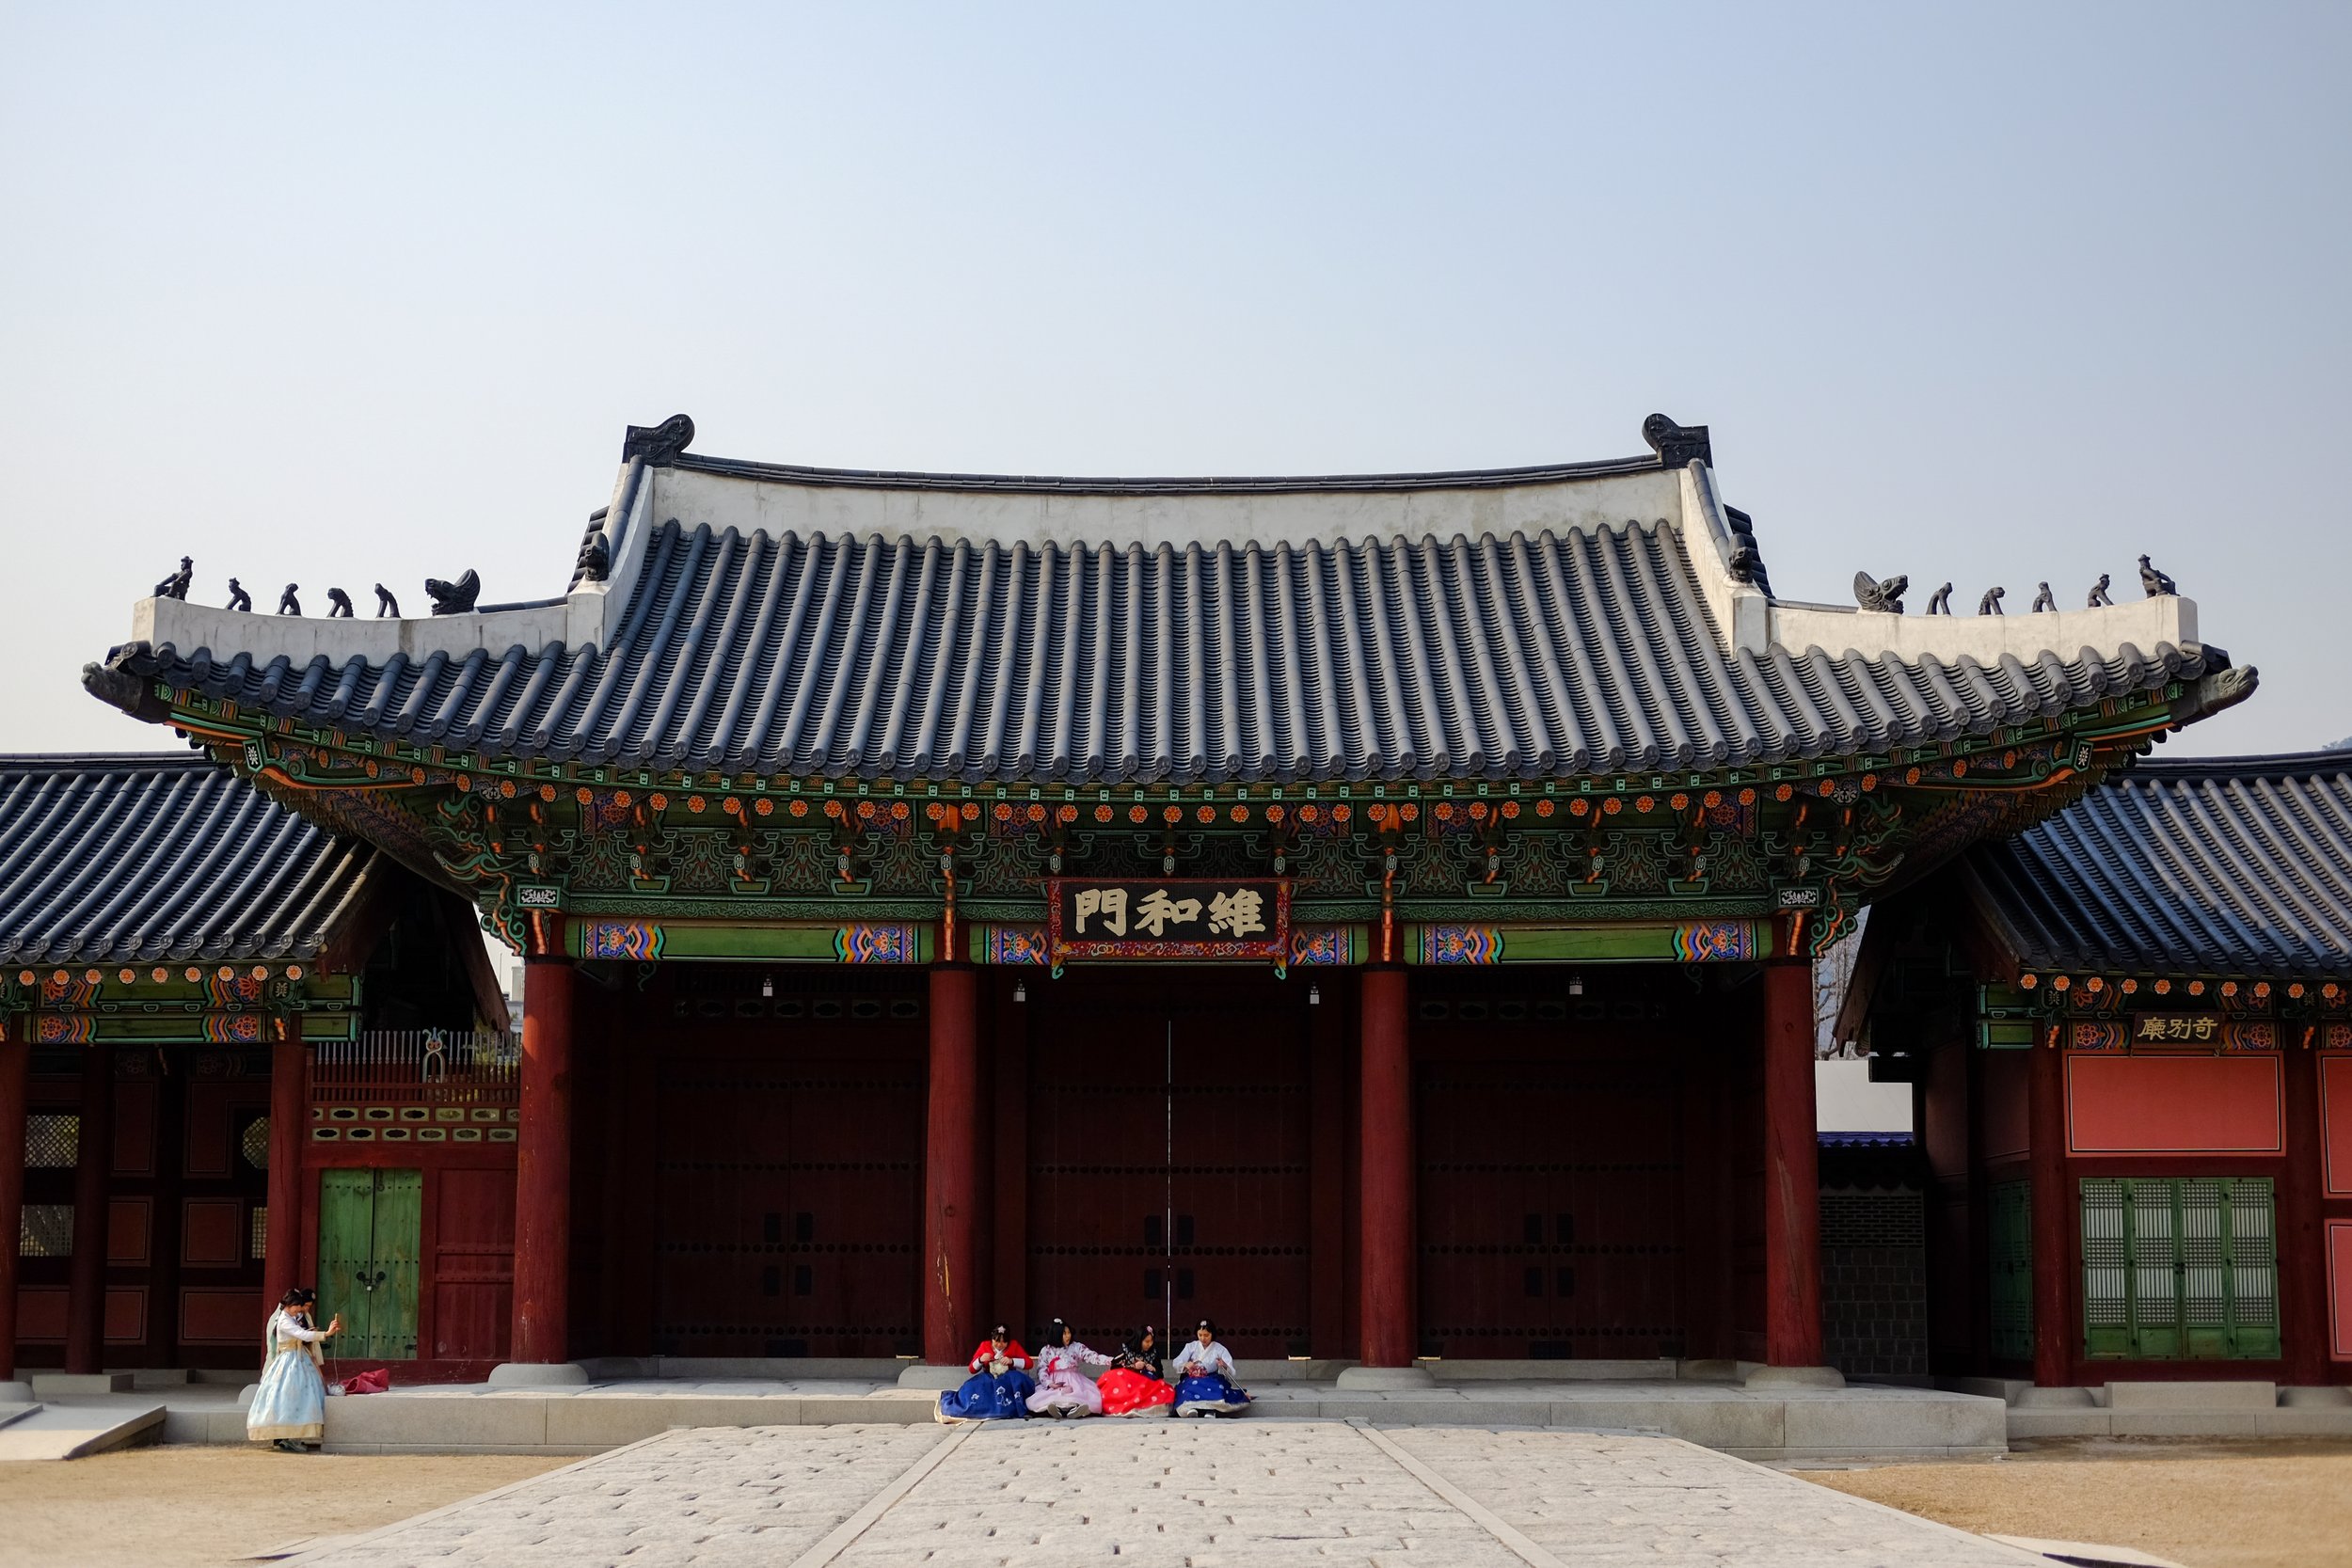  Taking a break at Gyeongbokgung Palace, Seoul, South Korea 